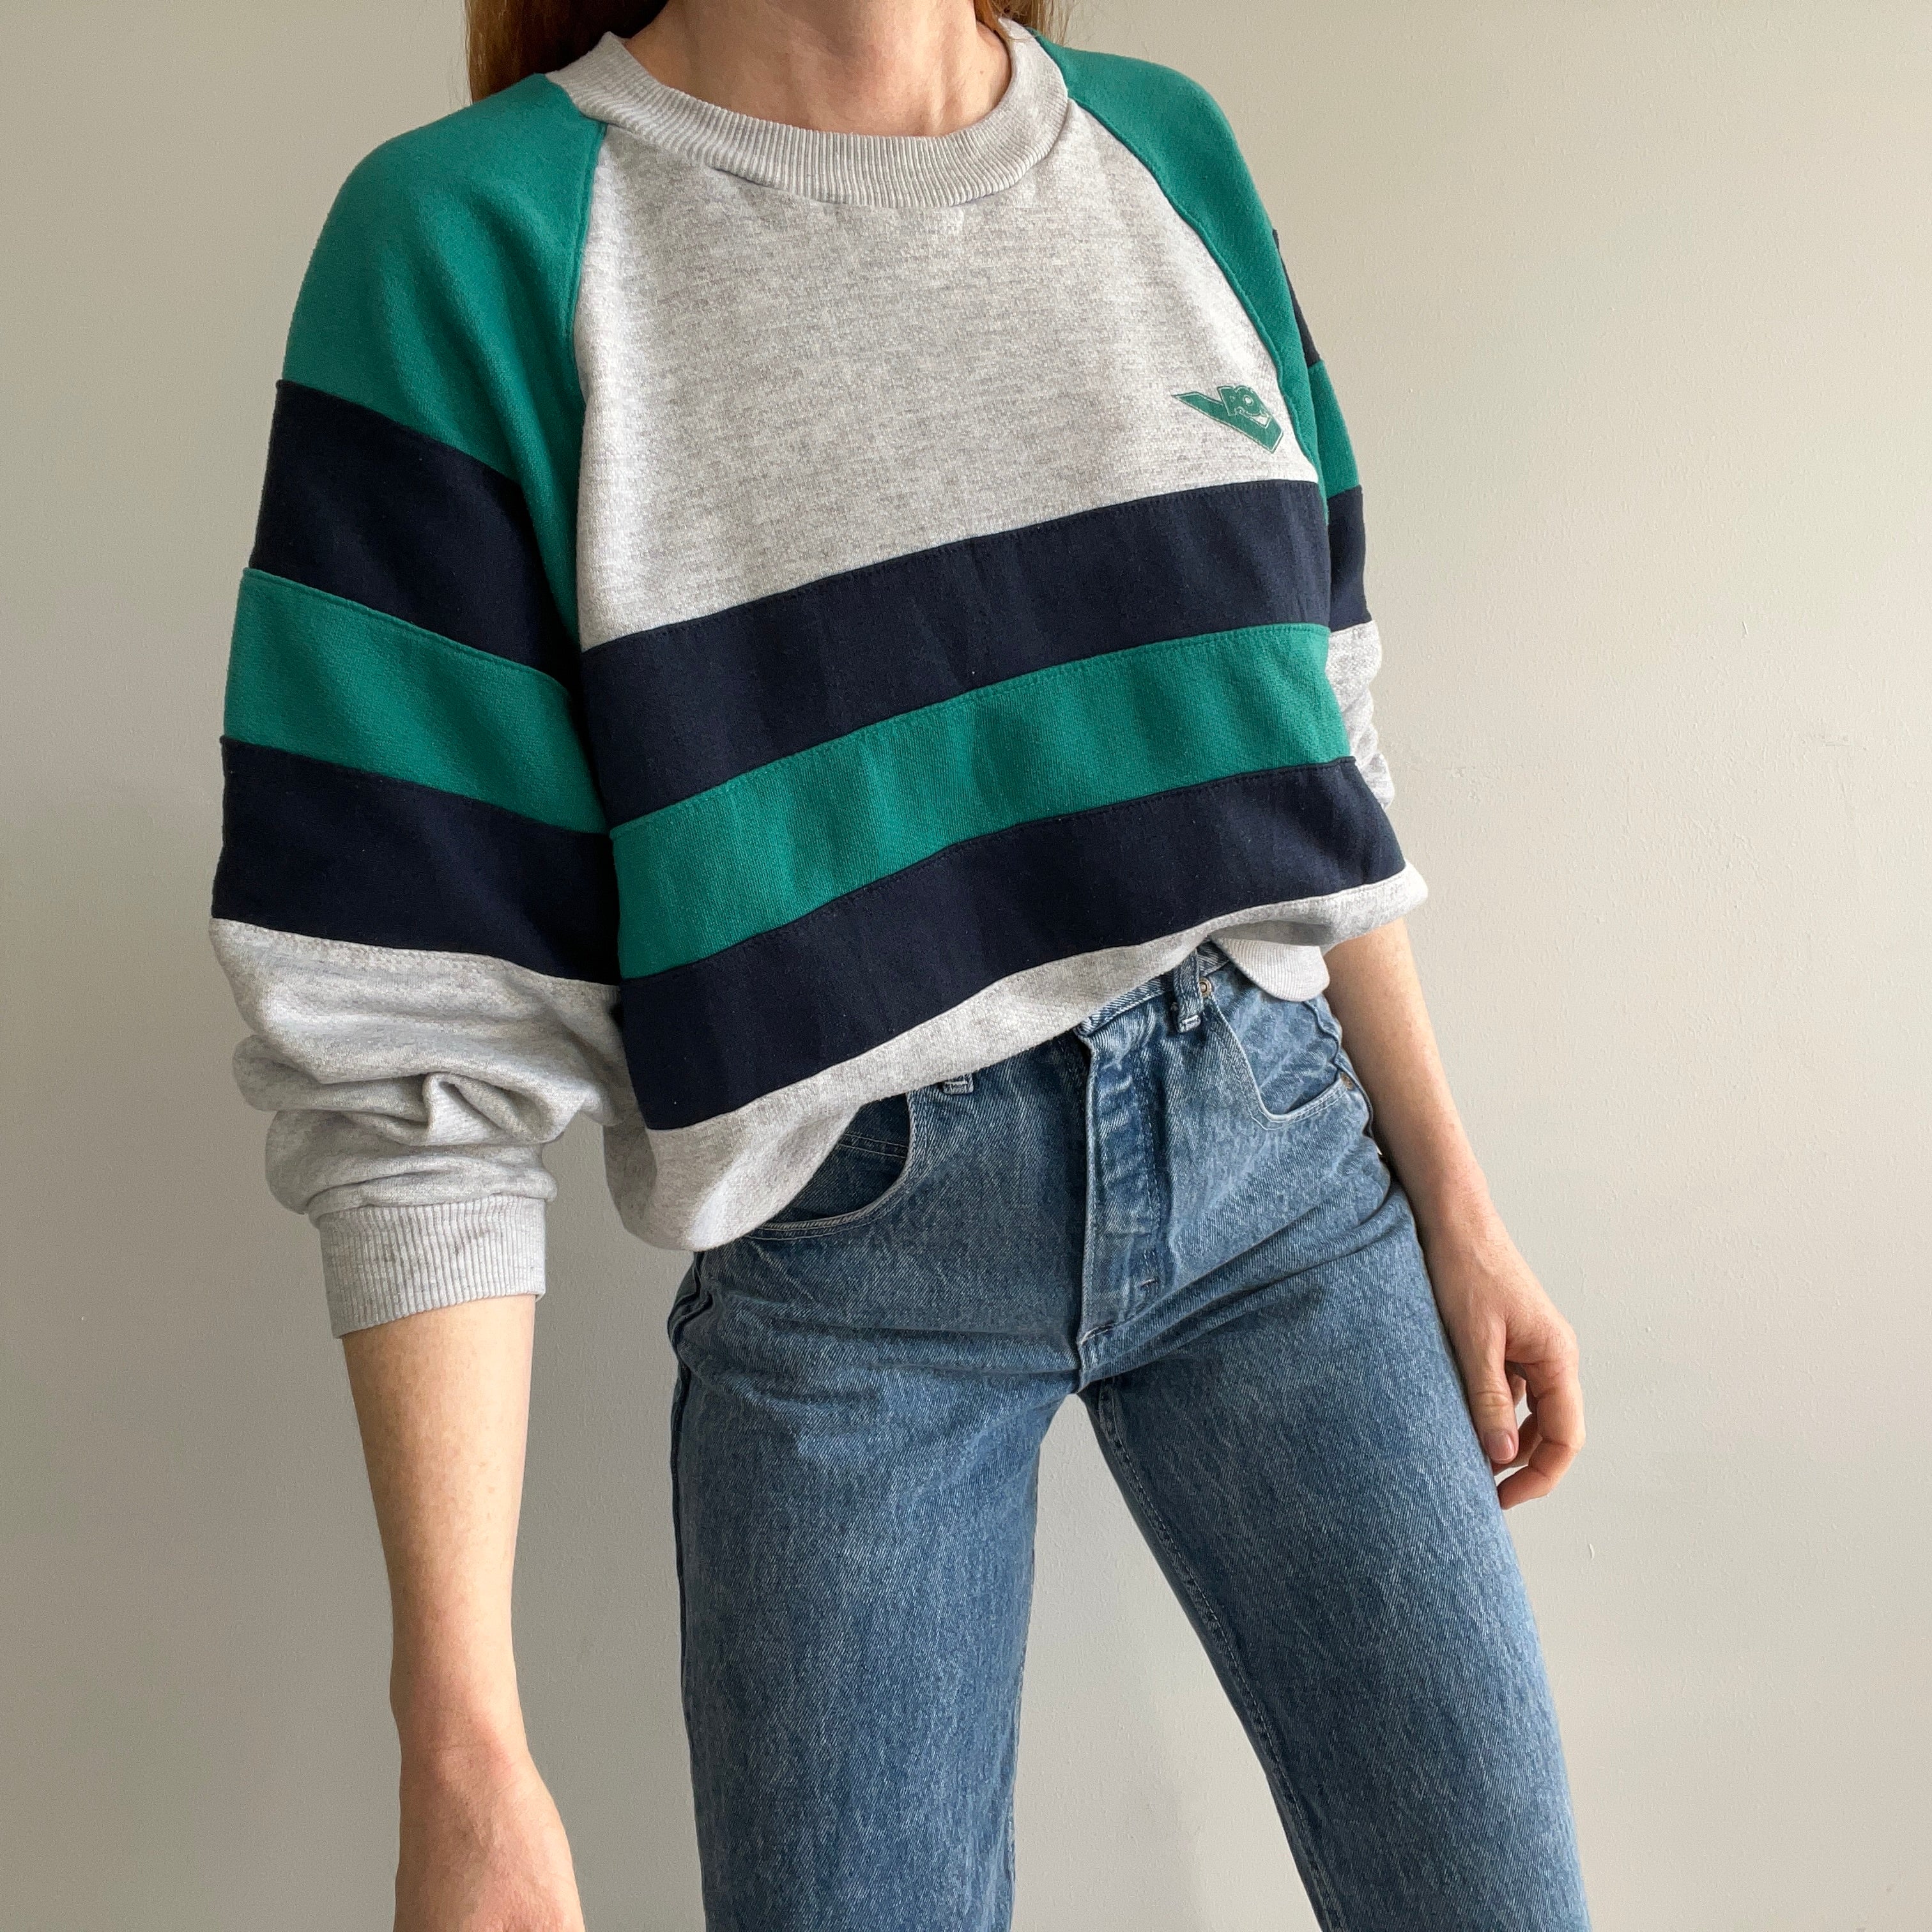 1980s Pony Color Block Sweatshirt - Oh My